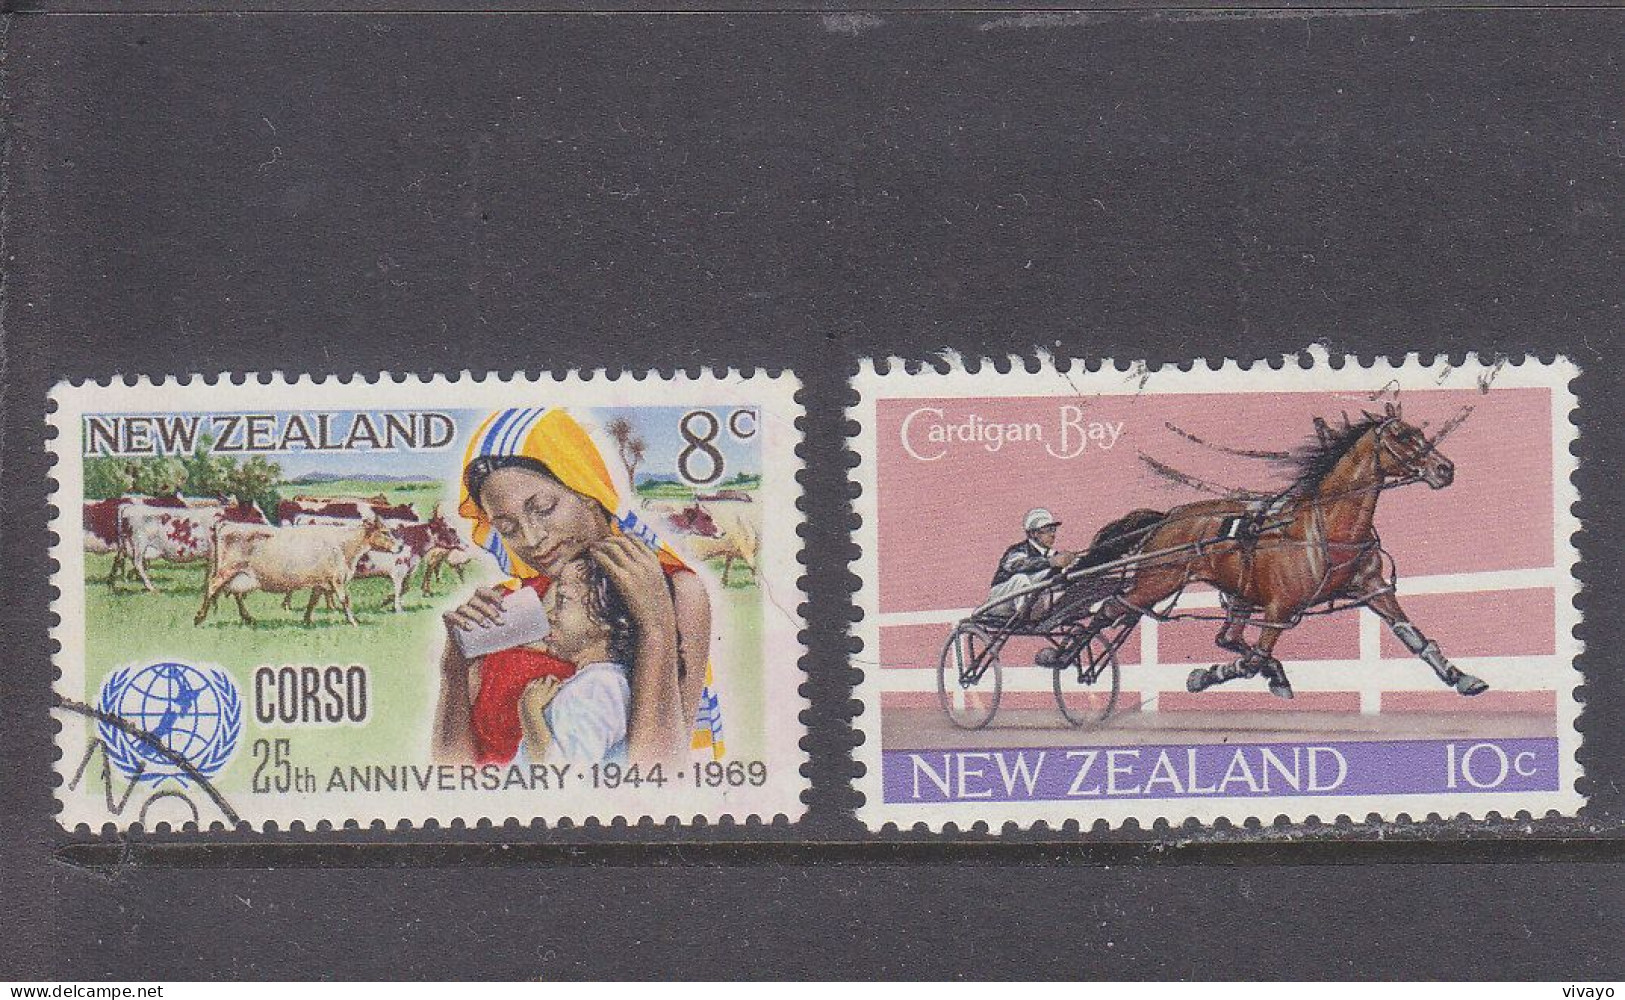 NEW ZEALAND - O / FINE CANCELLED - 1969/1970 - CORSO , CARDIGAN BAY , RACING - Yv. 498, 500 - Mi. 515, 516 - Gebraucht